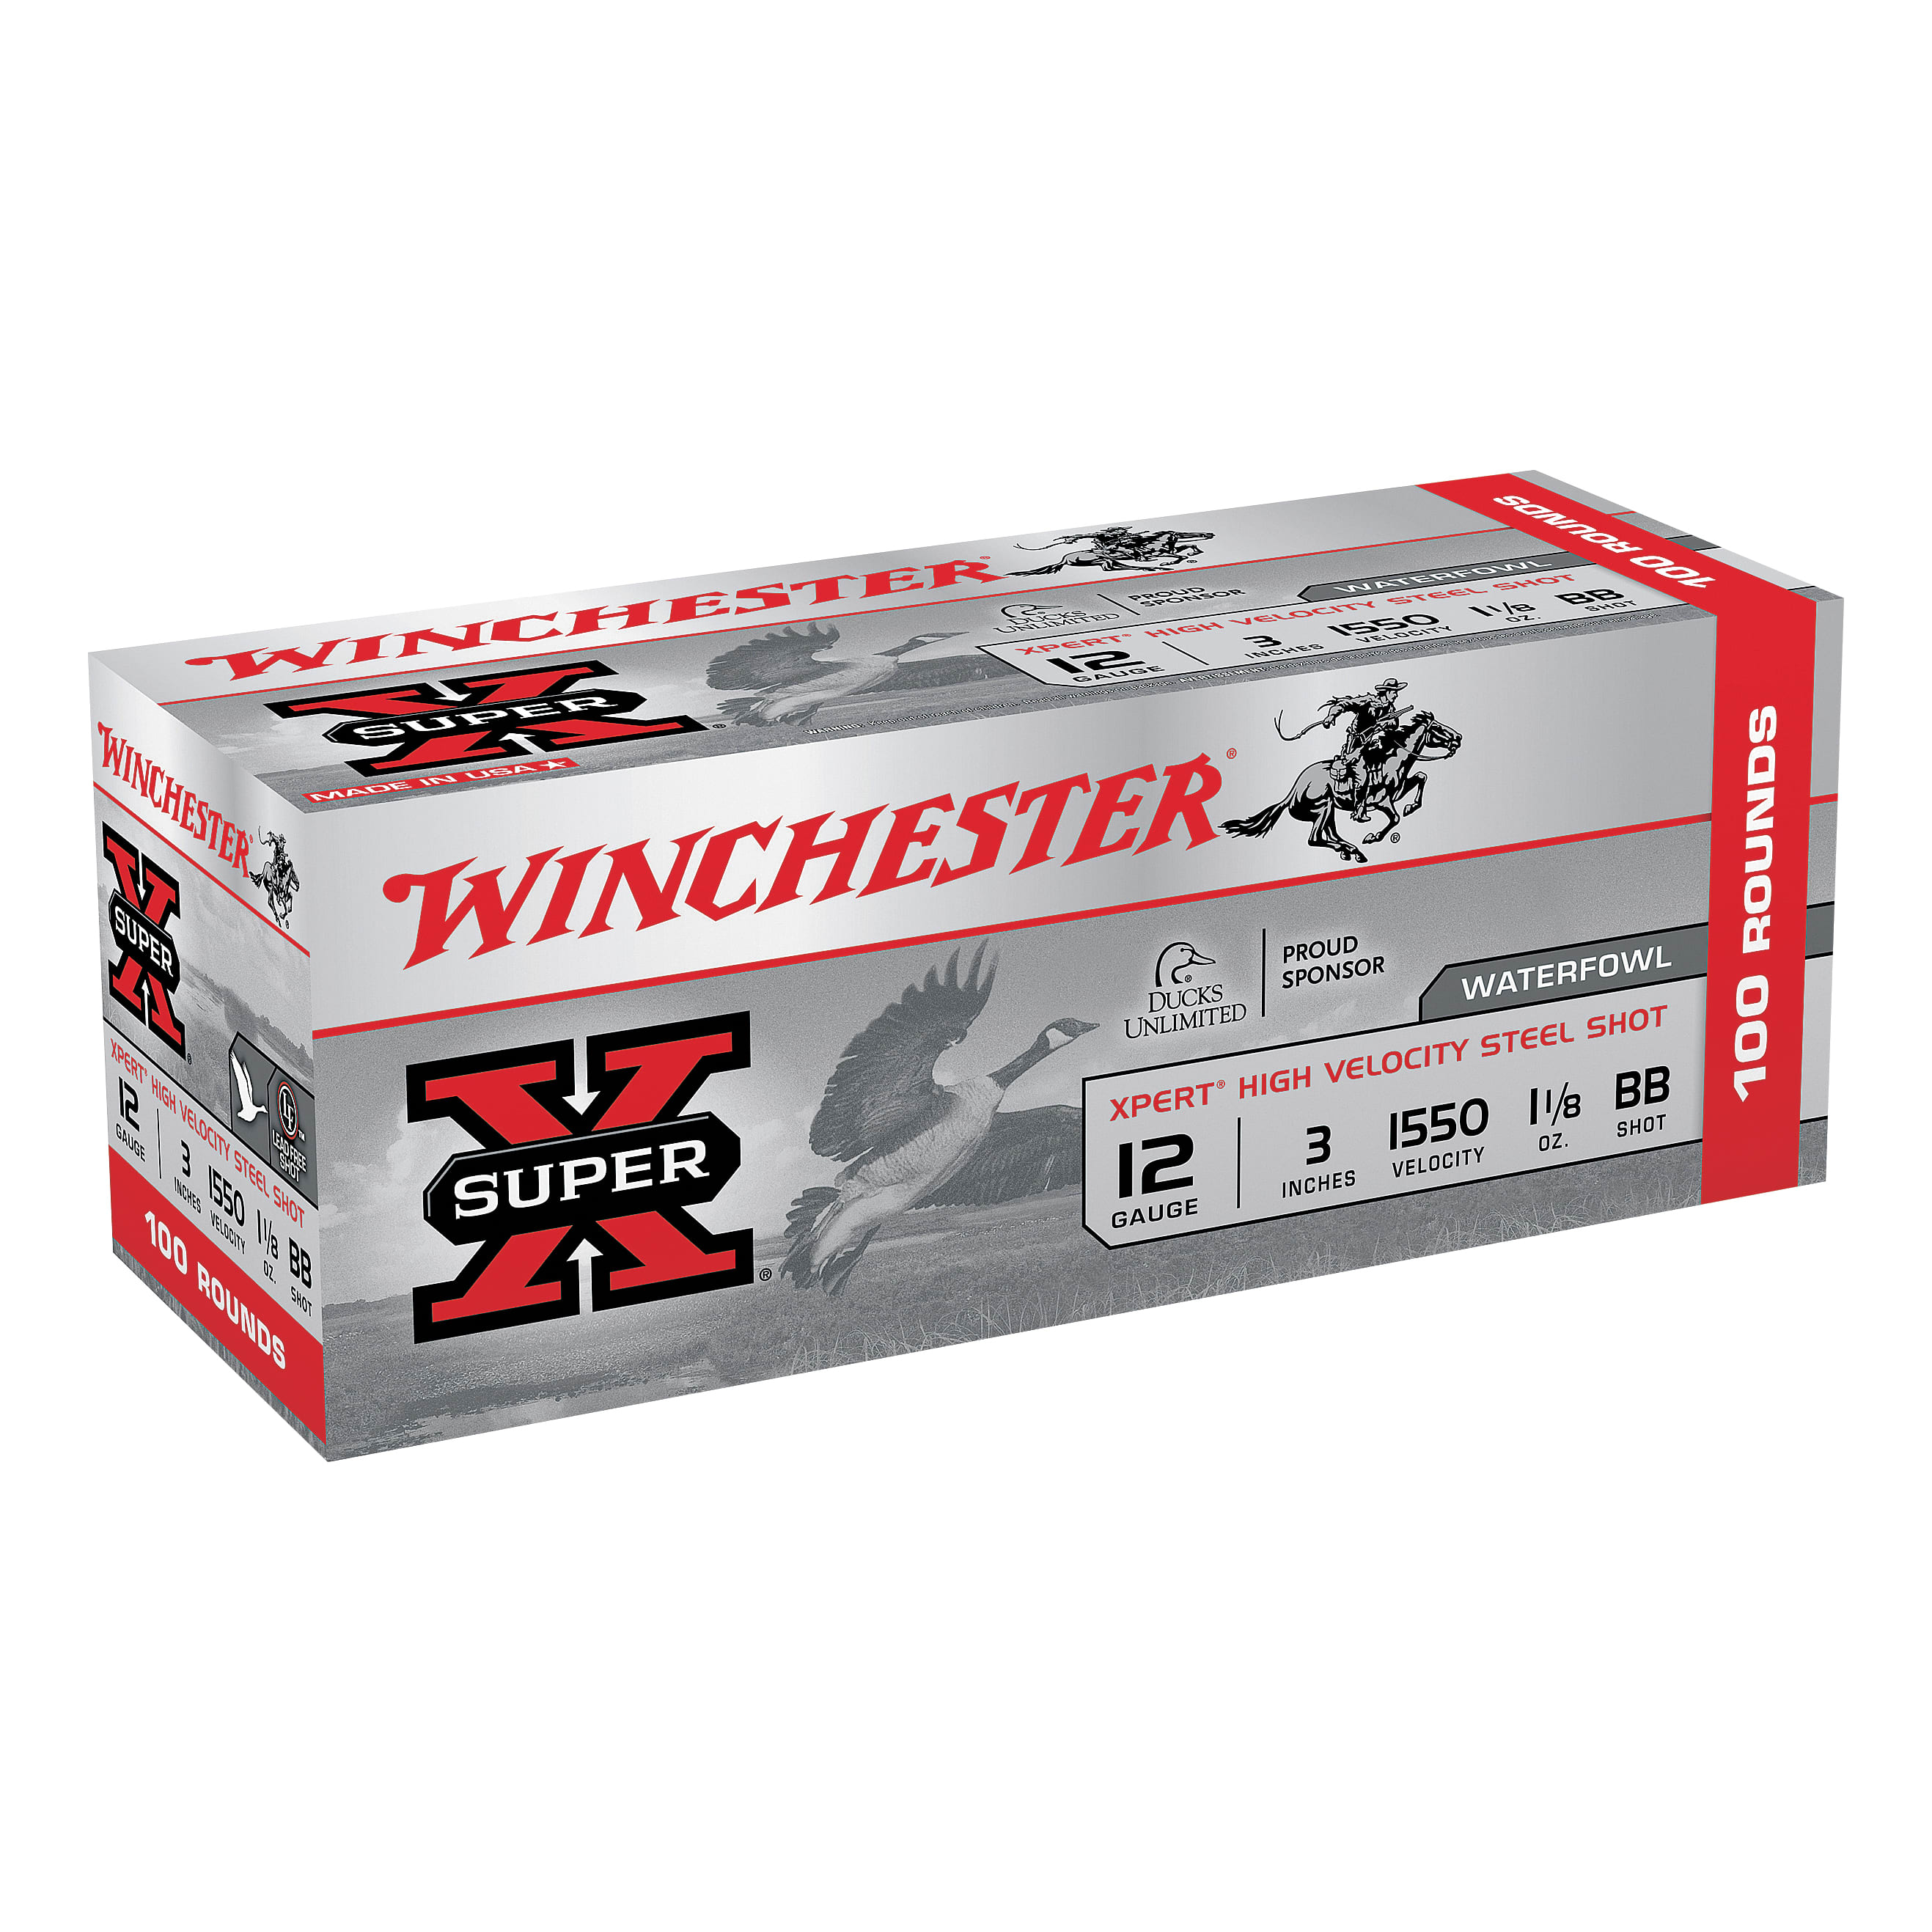 Winchester XPert Hi-Velocity Steel Waterfowl Shotshells - Value Packs - 100 Rounds